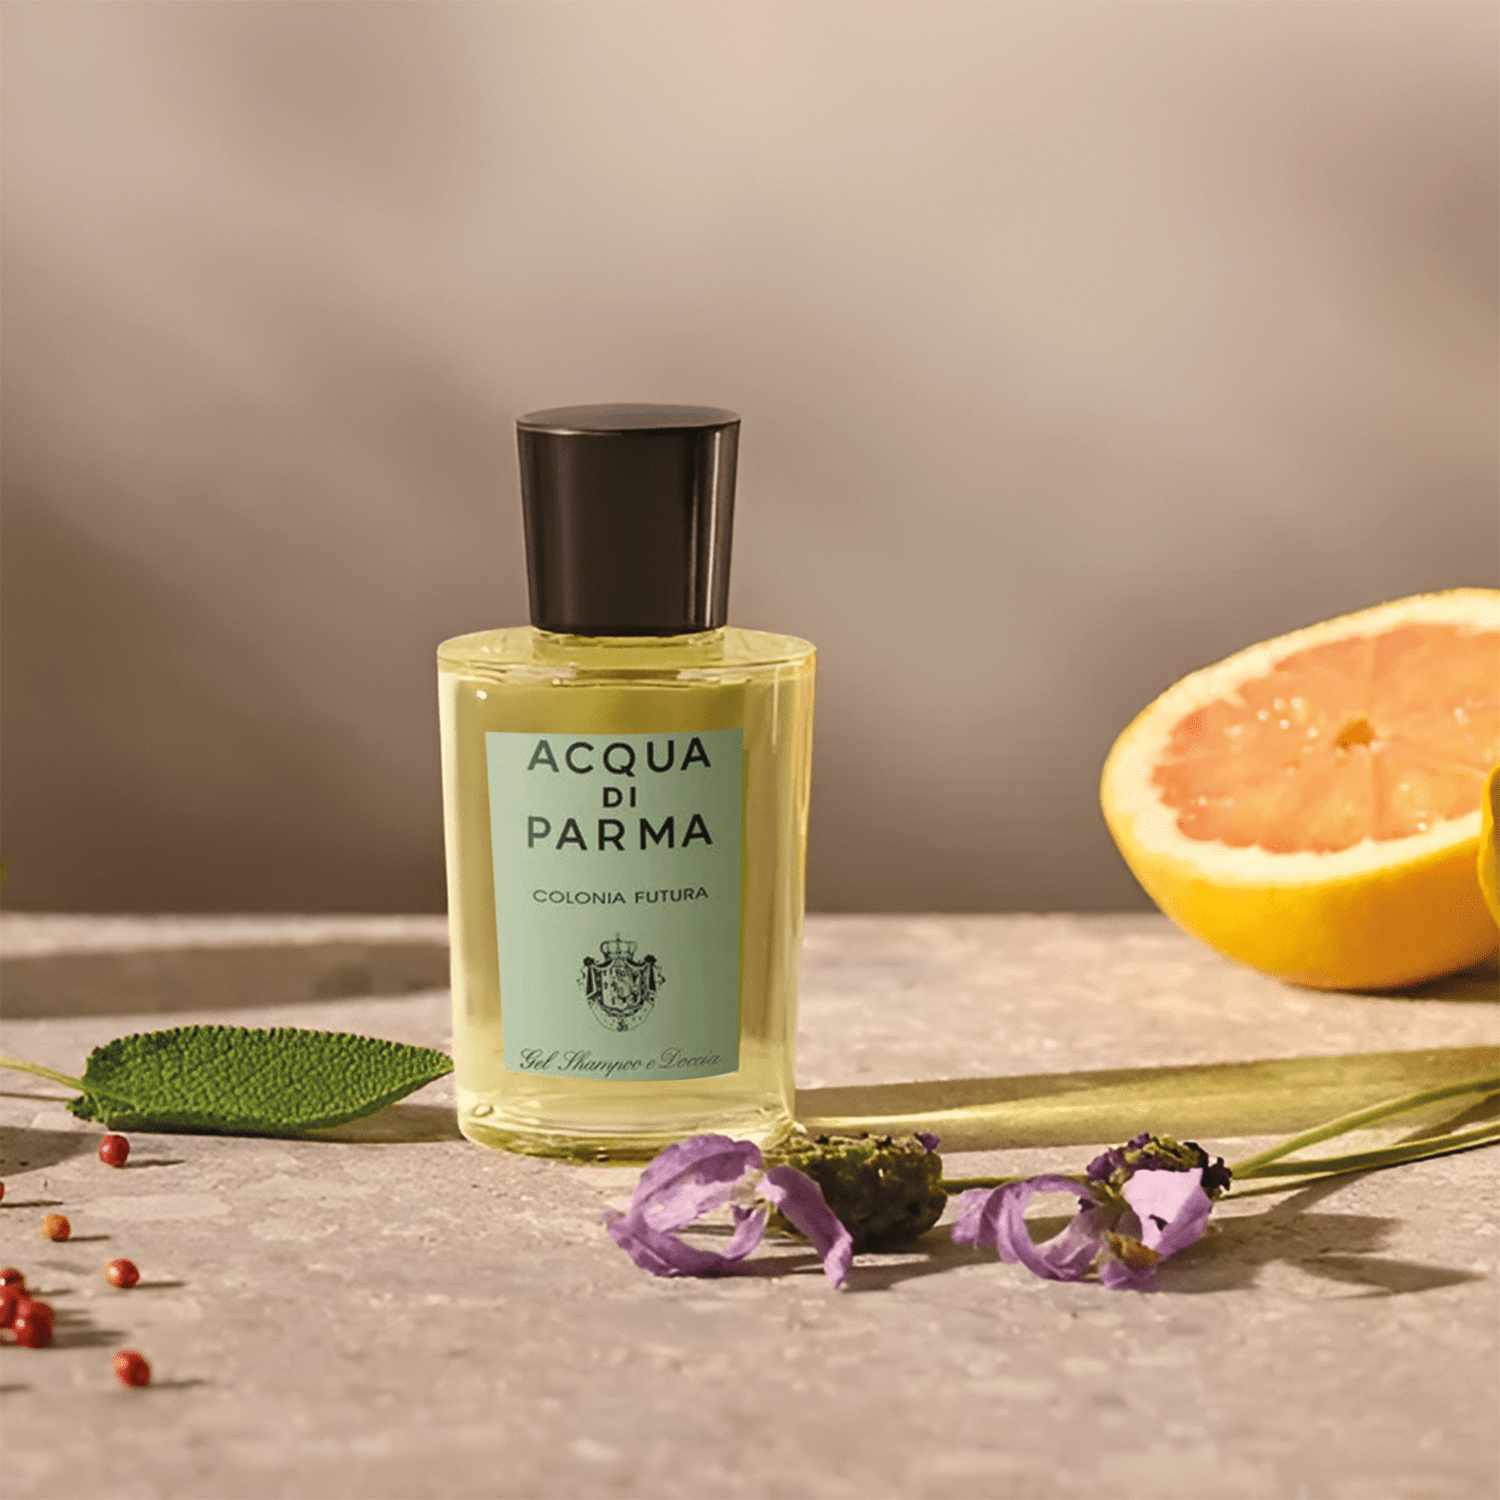 Acqua Di Parma Colonia Futura Hair And Shower Gel | My Perfume Shop Australia